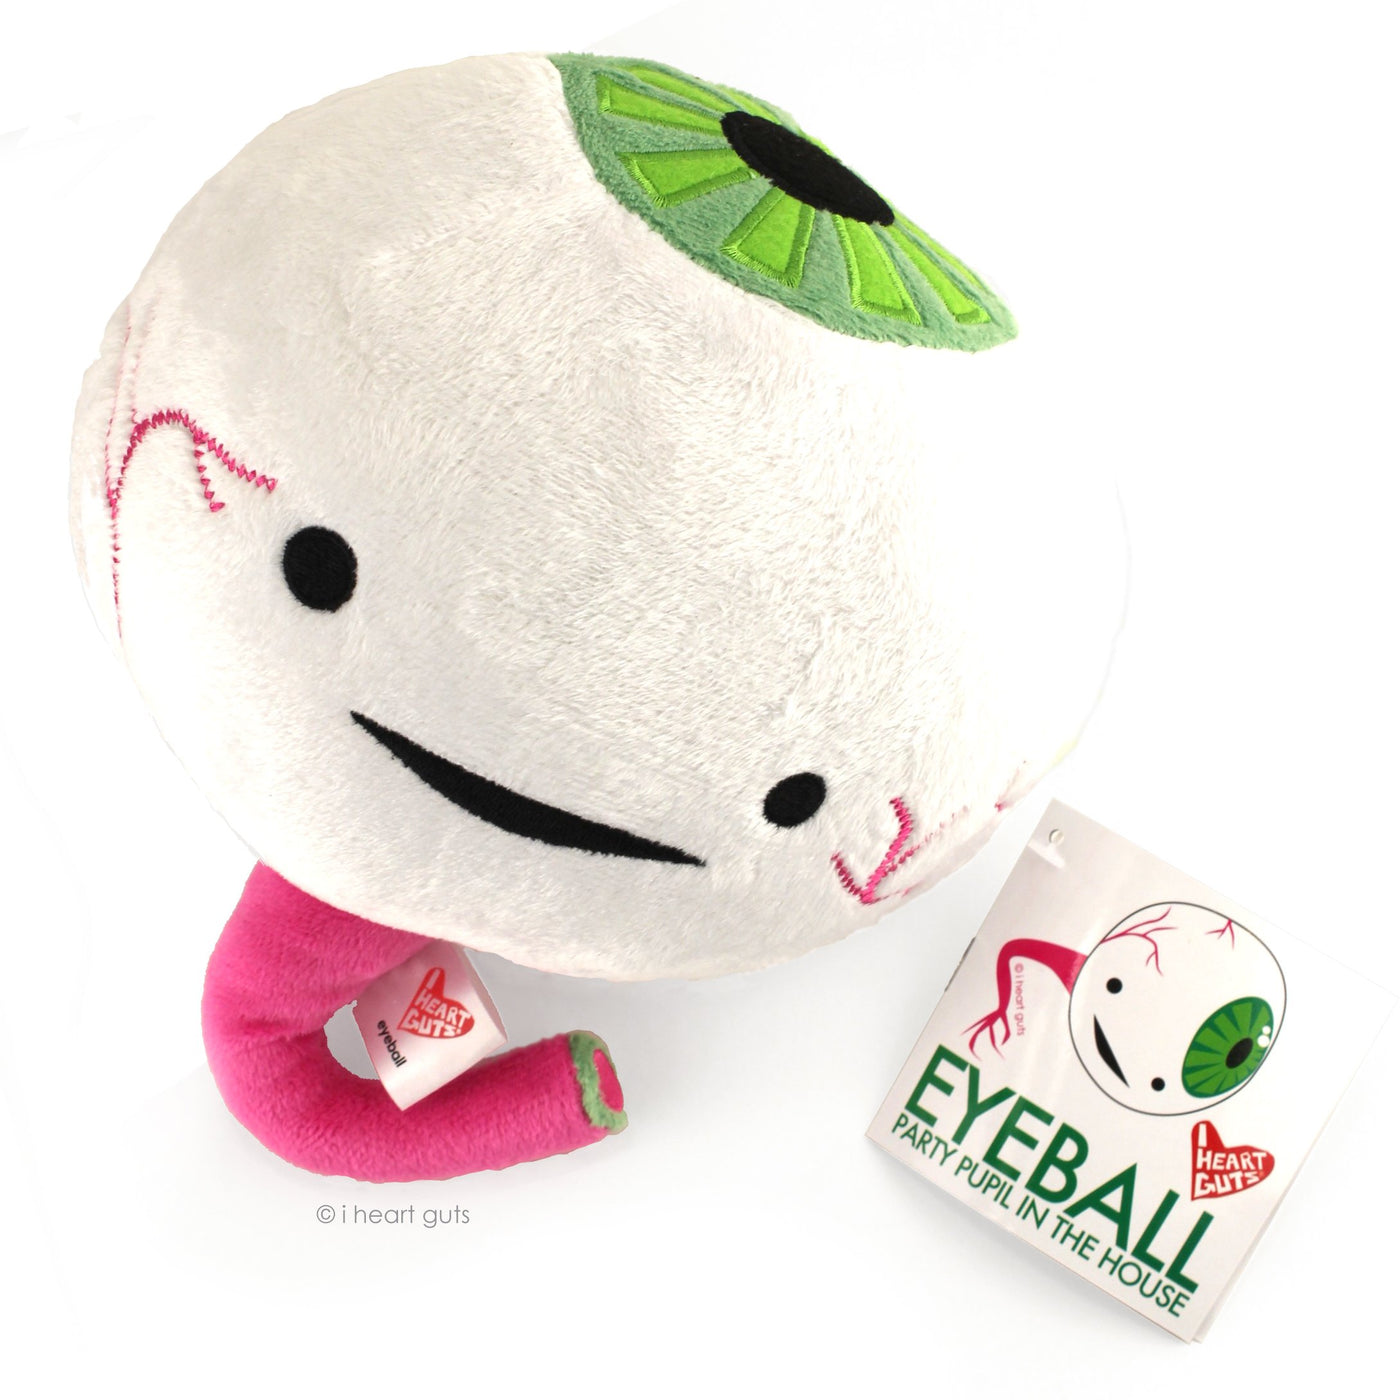 Eyeball Plush Green Iris - Party Pupil in the House! - Plush Organ Stuffed Toy Pillow - I Heart Guts